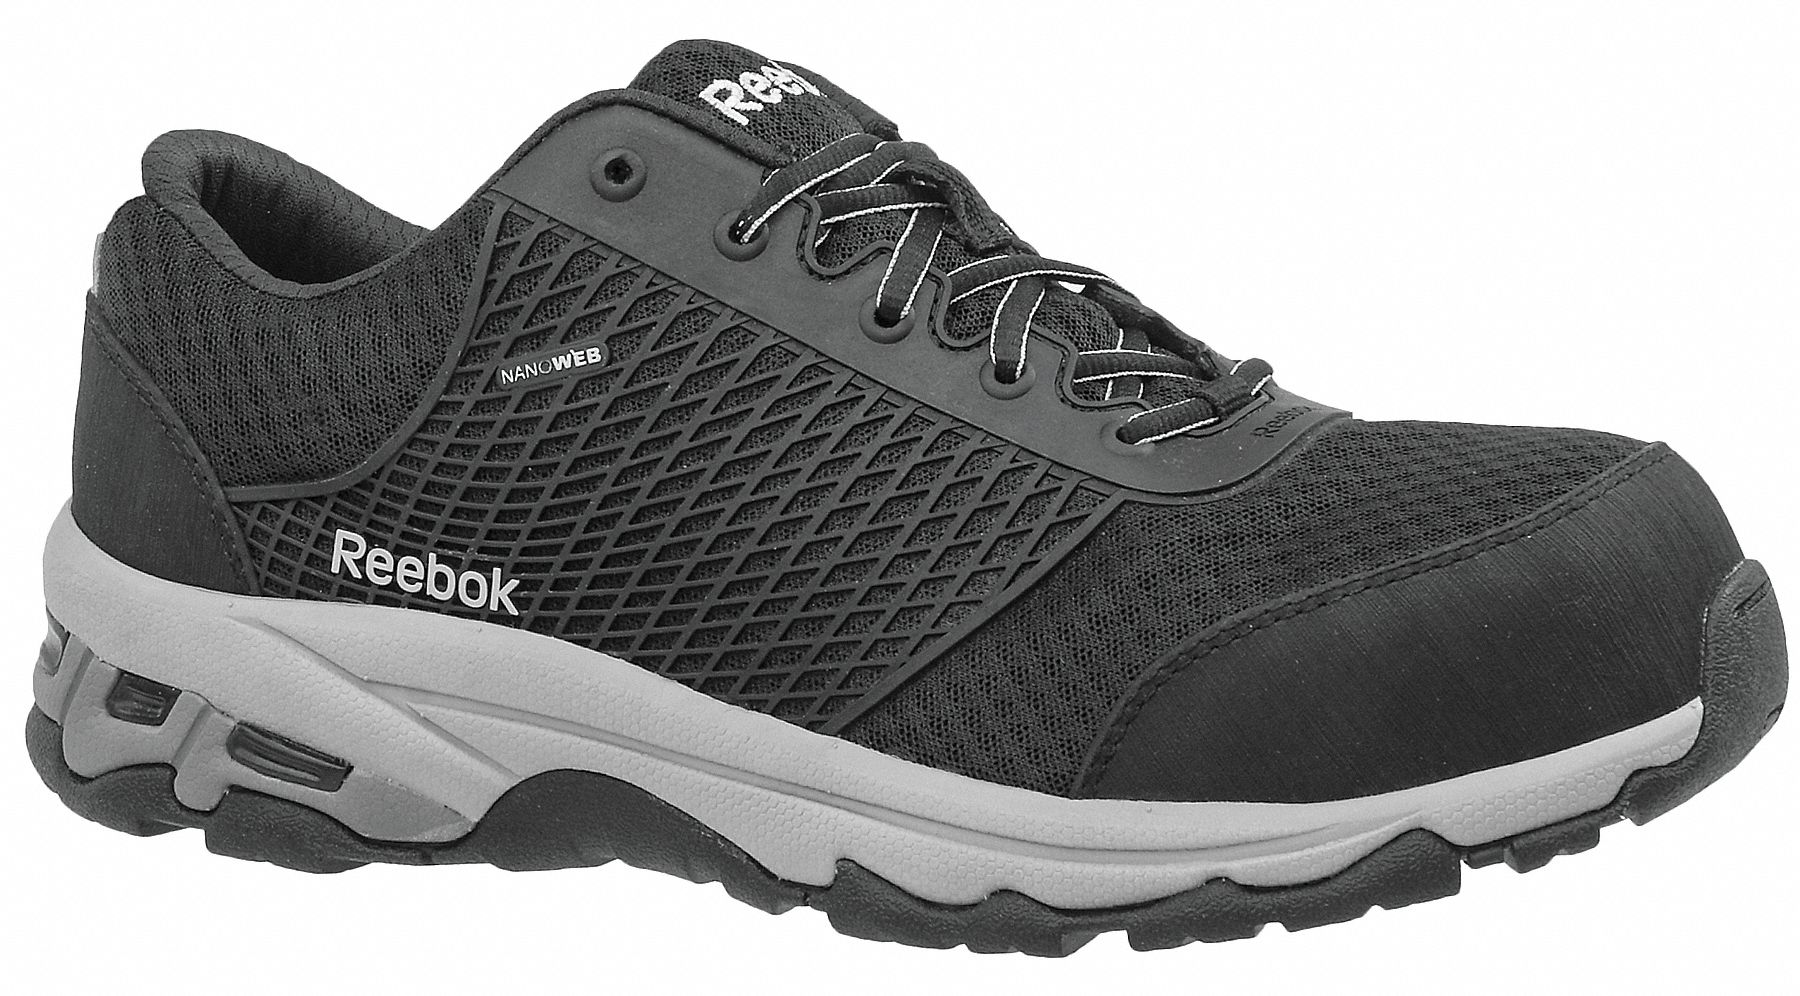 reebok composite toe tennis shoes